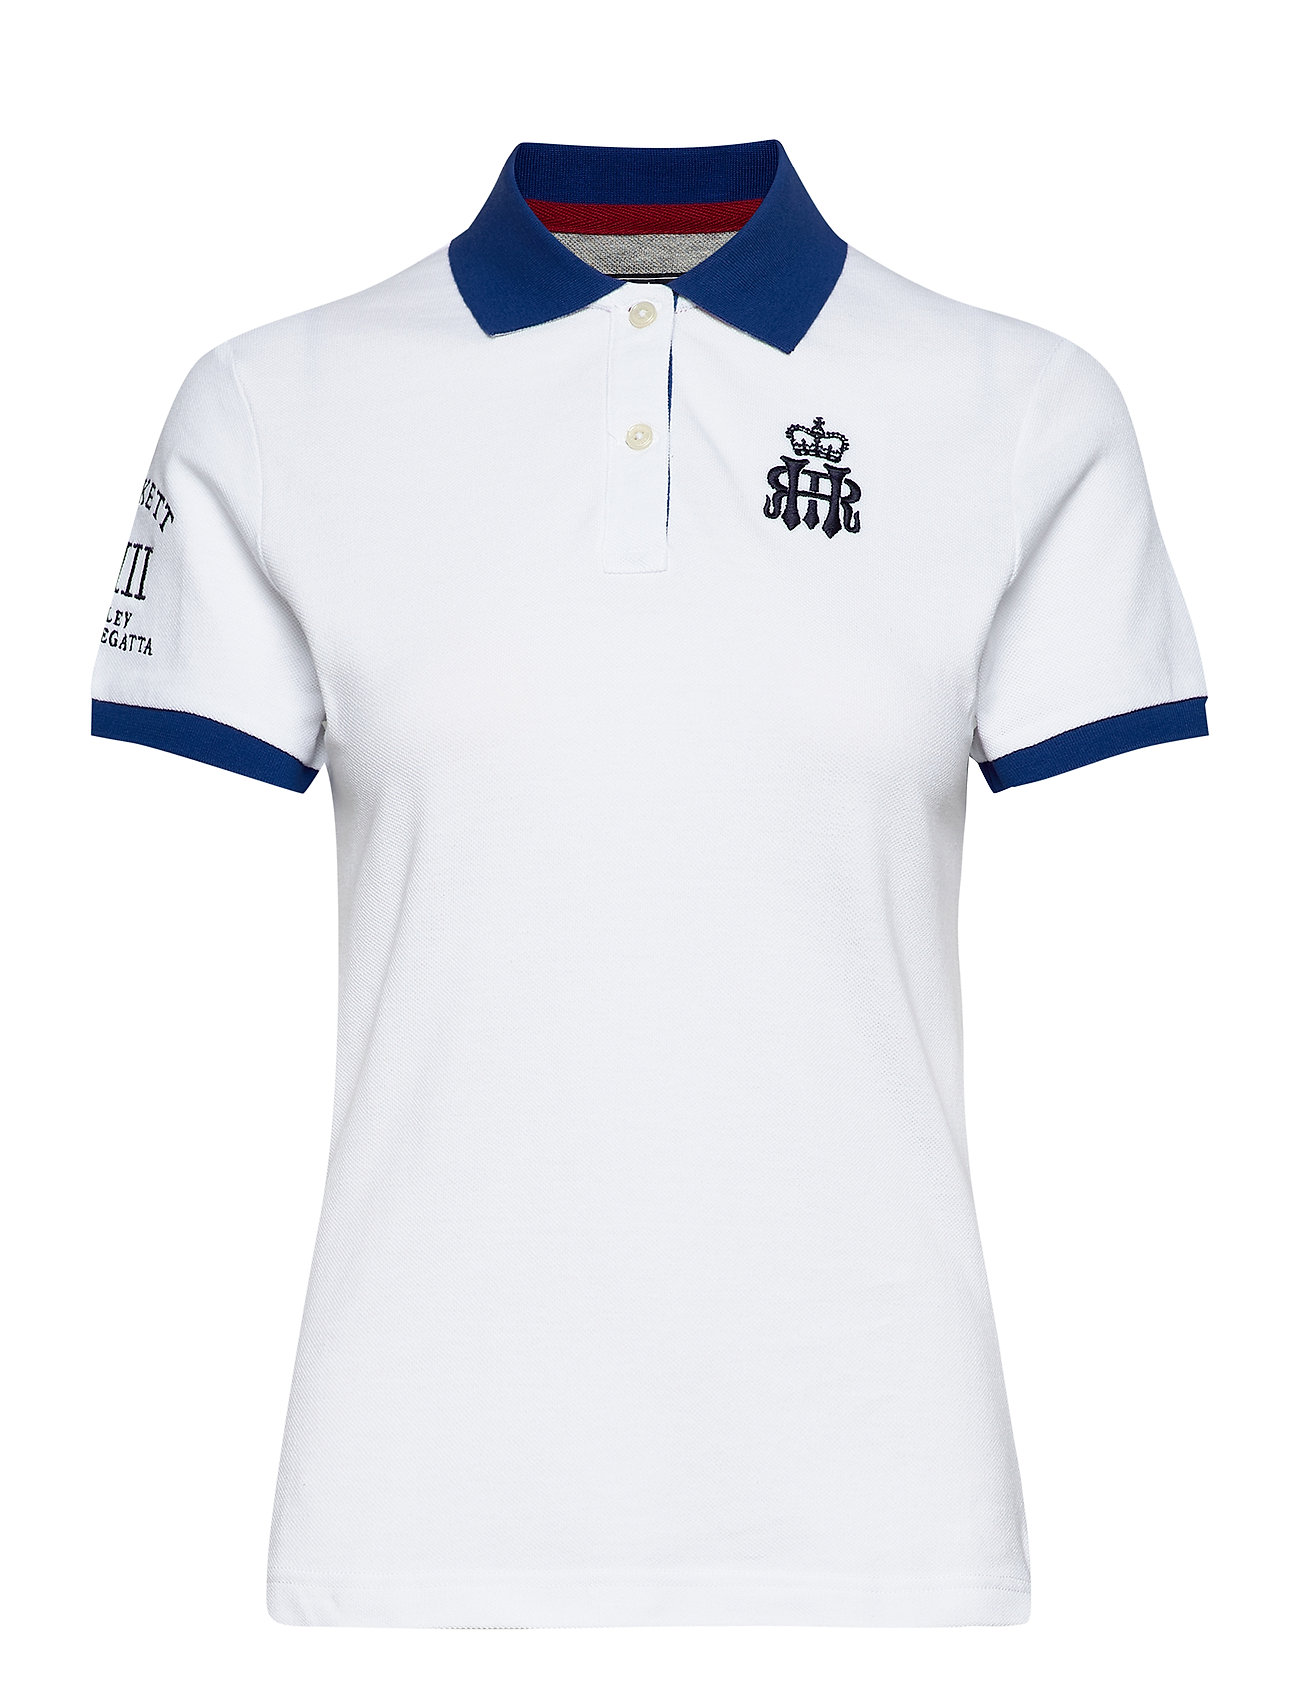 Hrr Ujk Cllr W T-shirts & Tops Polos Valkoinen Hackett London